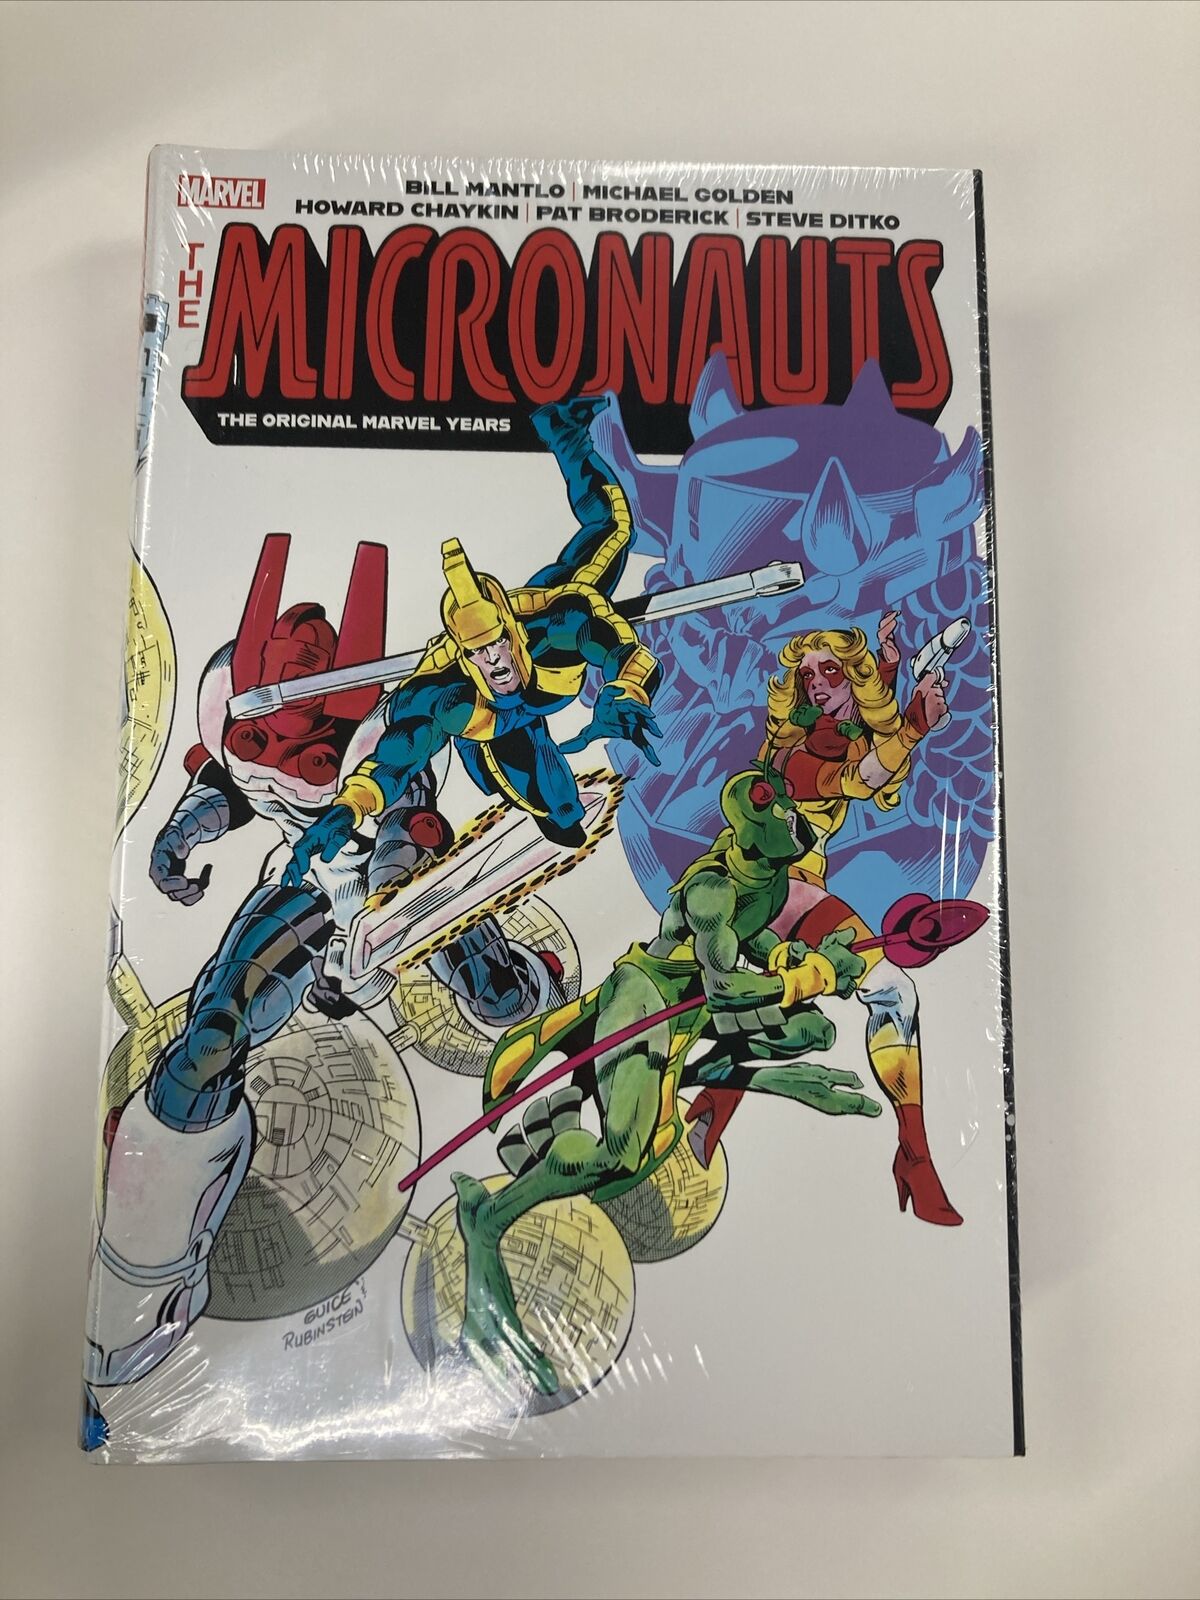 DAMAGED Micronauts Original Marvel Years Omnibus Vol 1 GUICE DM COVER HC